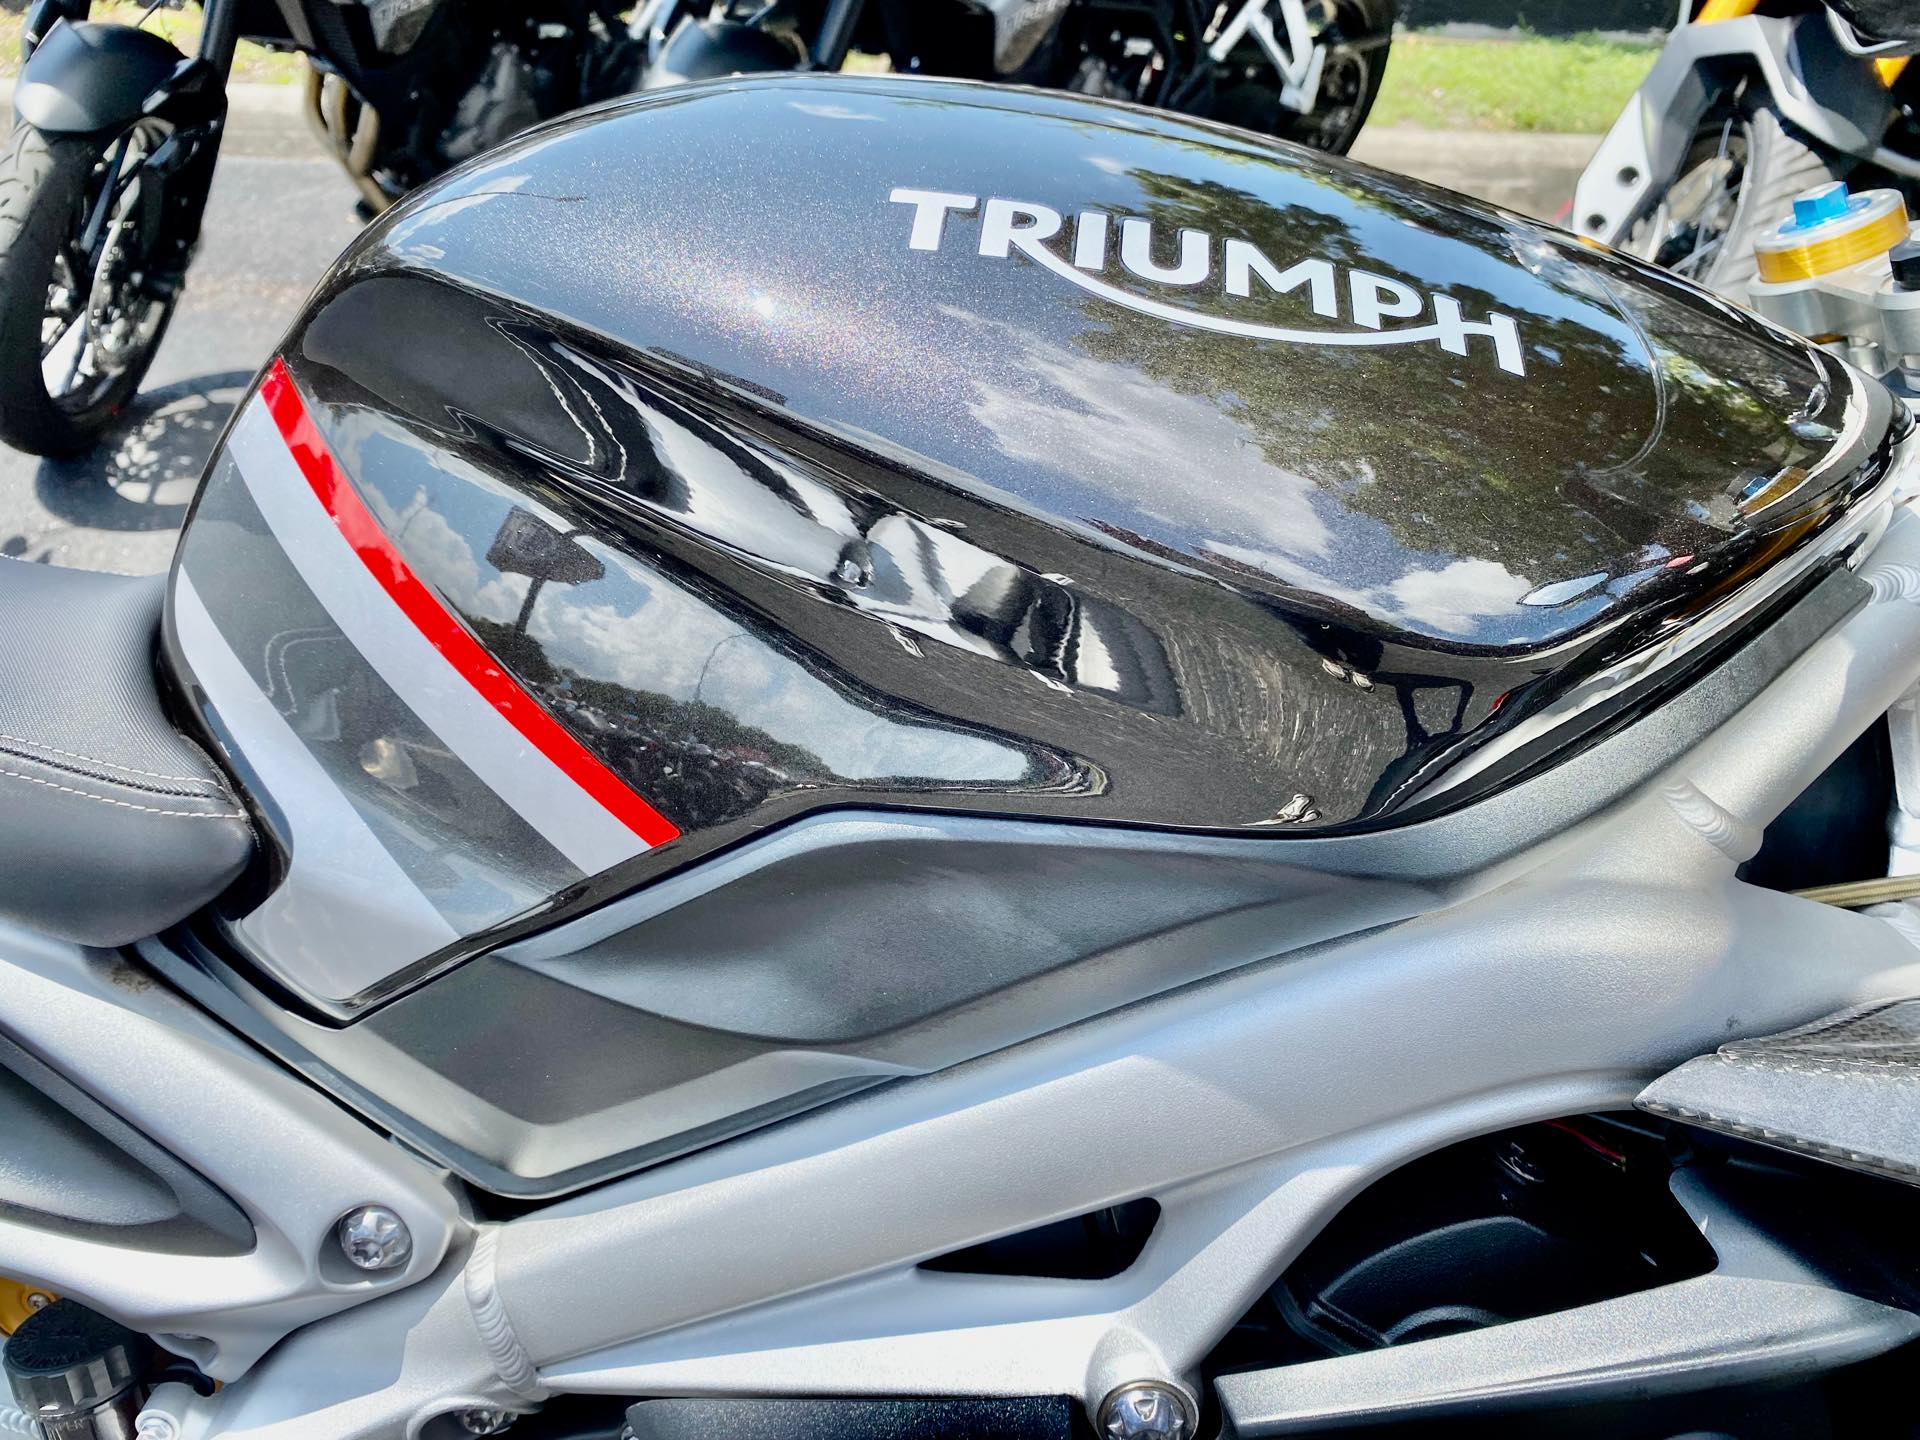 2020 Triumph Daytona Moto2 765 at Tampa Triumph, Tampa, FL 33614